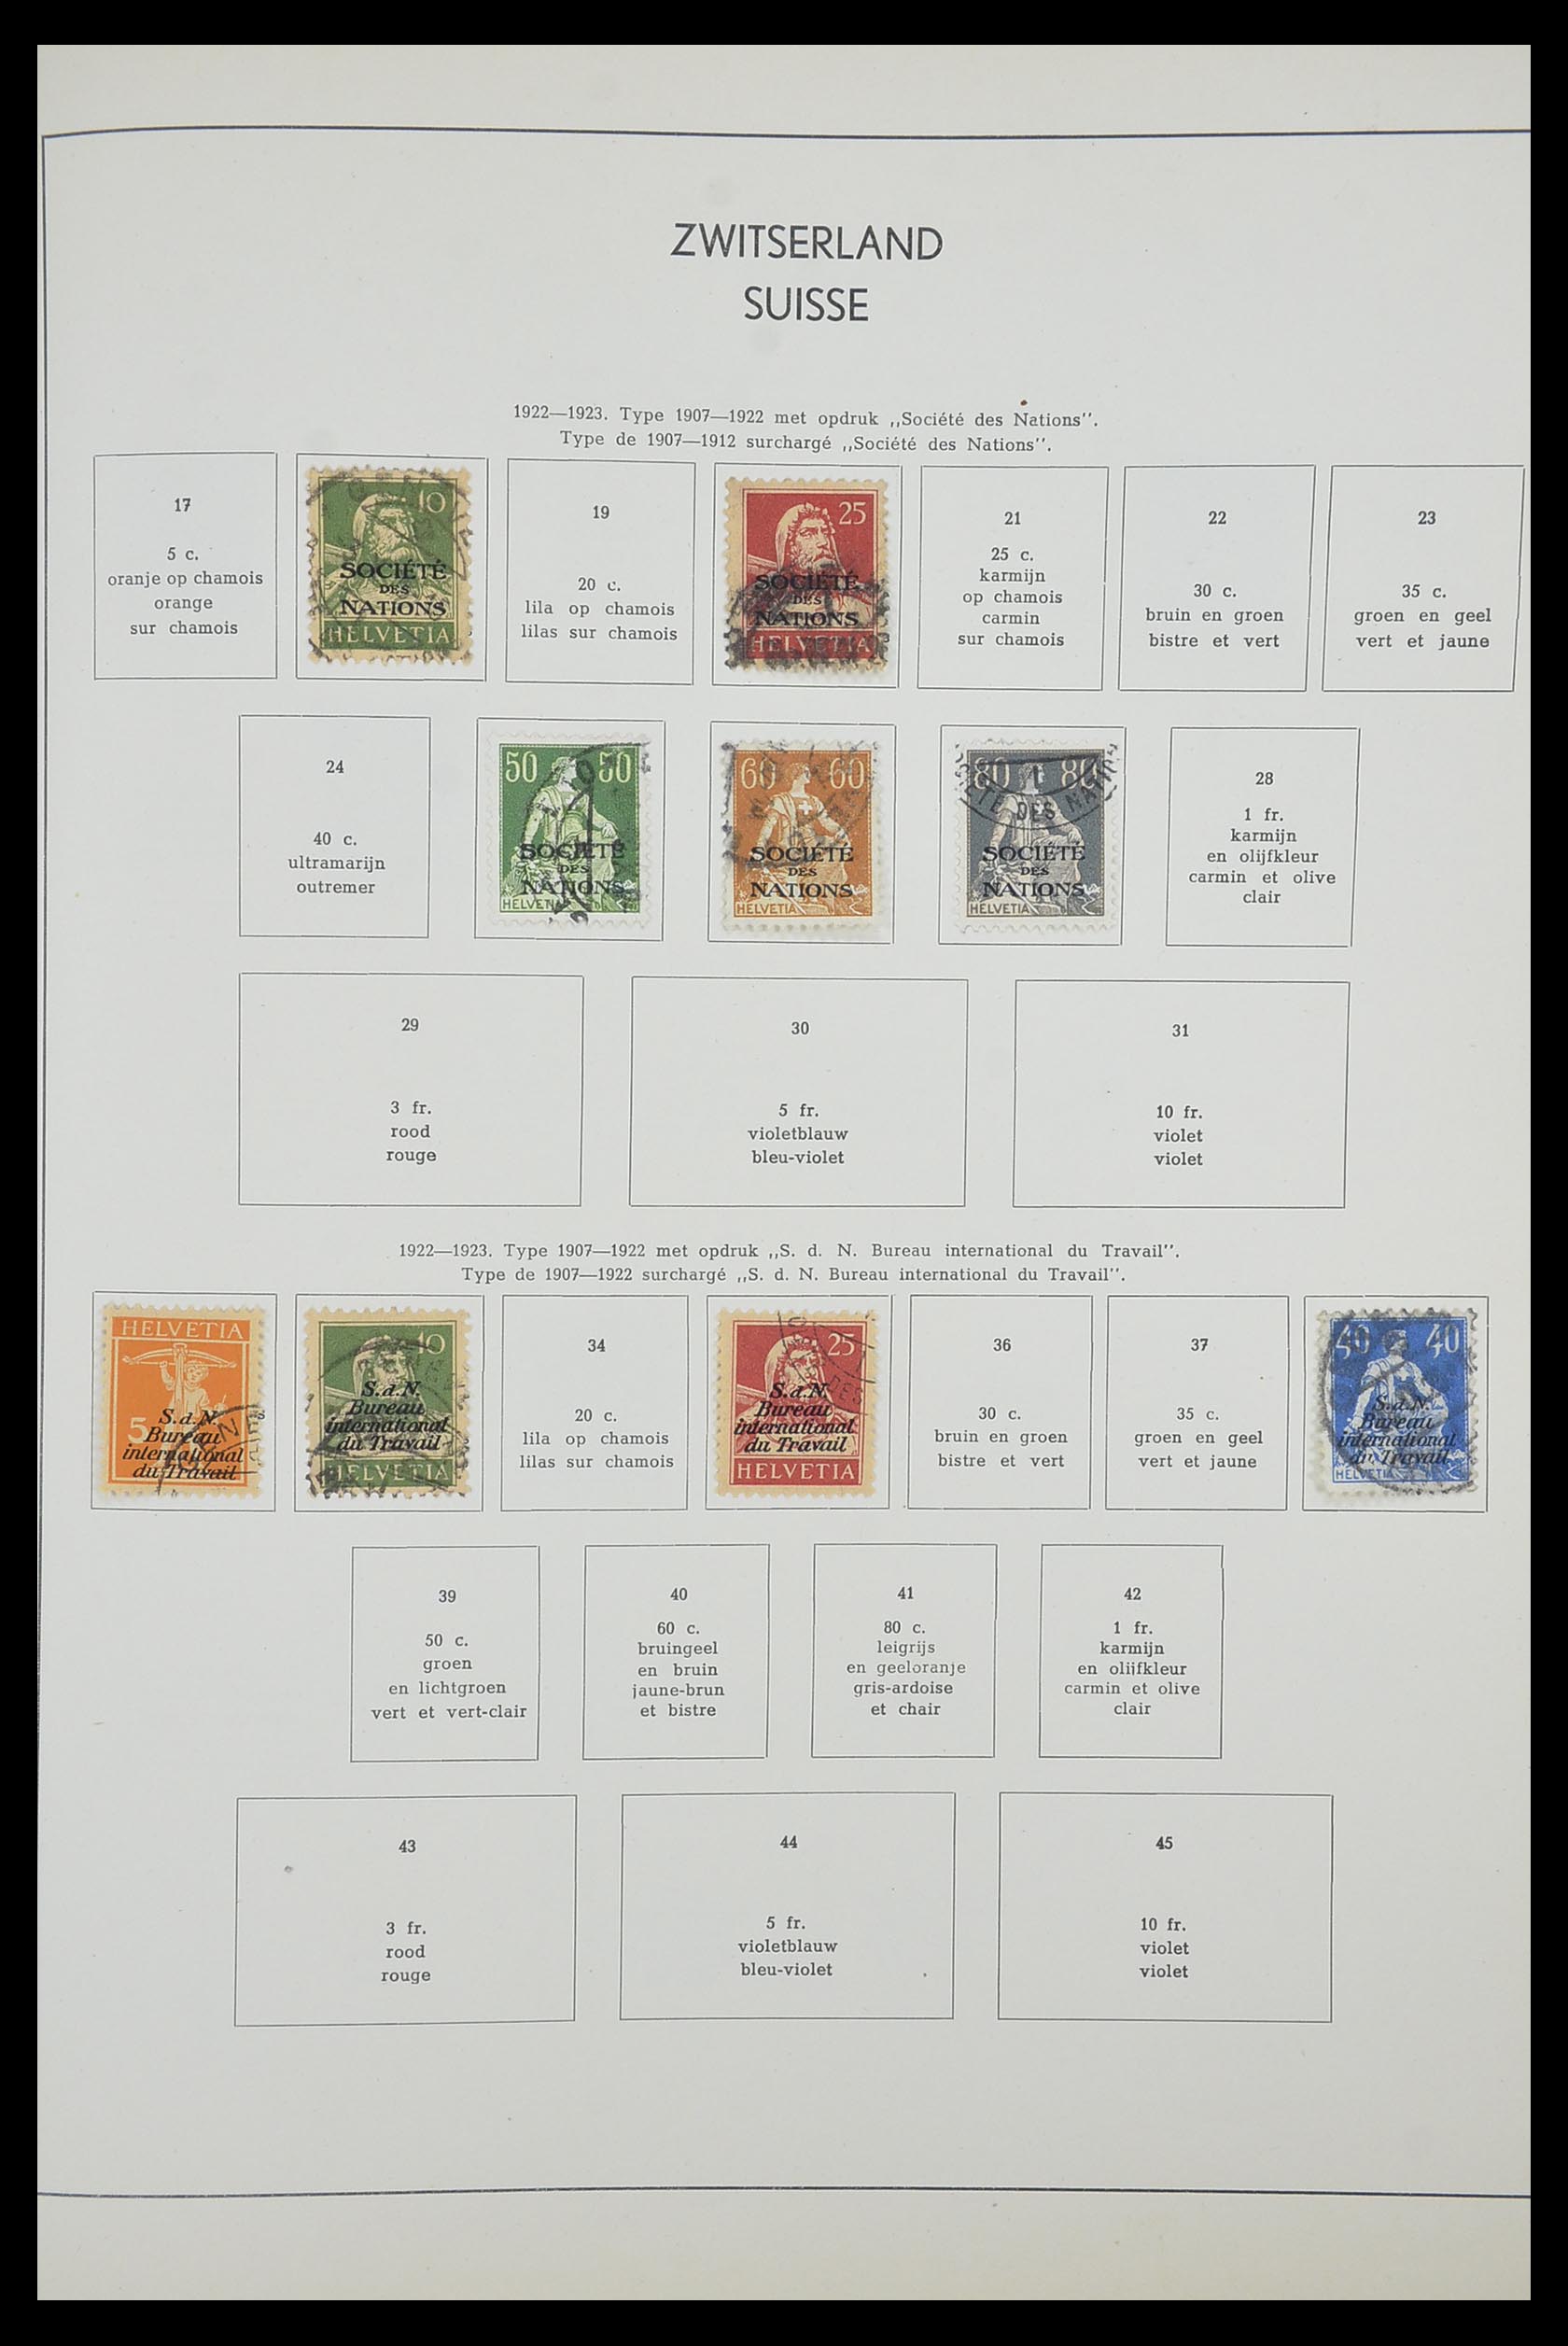 33601 108 - Stamp collection 33601 Switzerland 1854-1985.